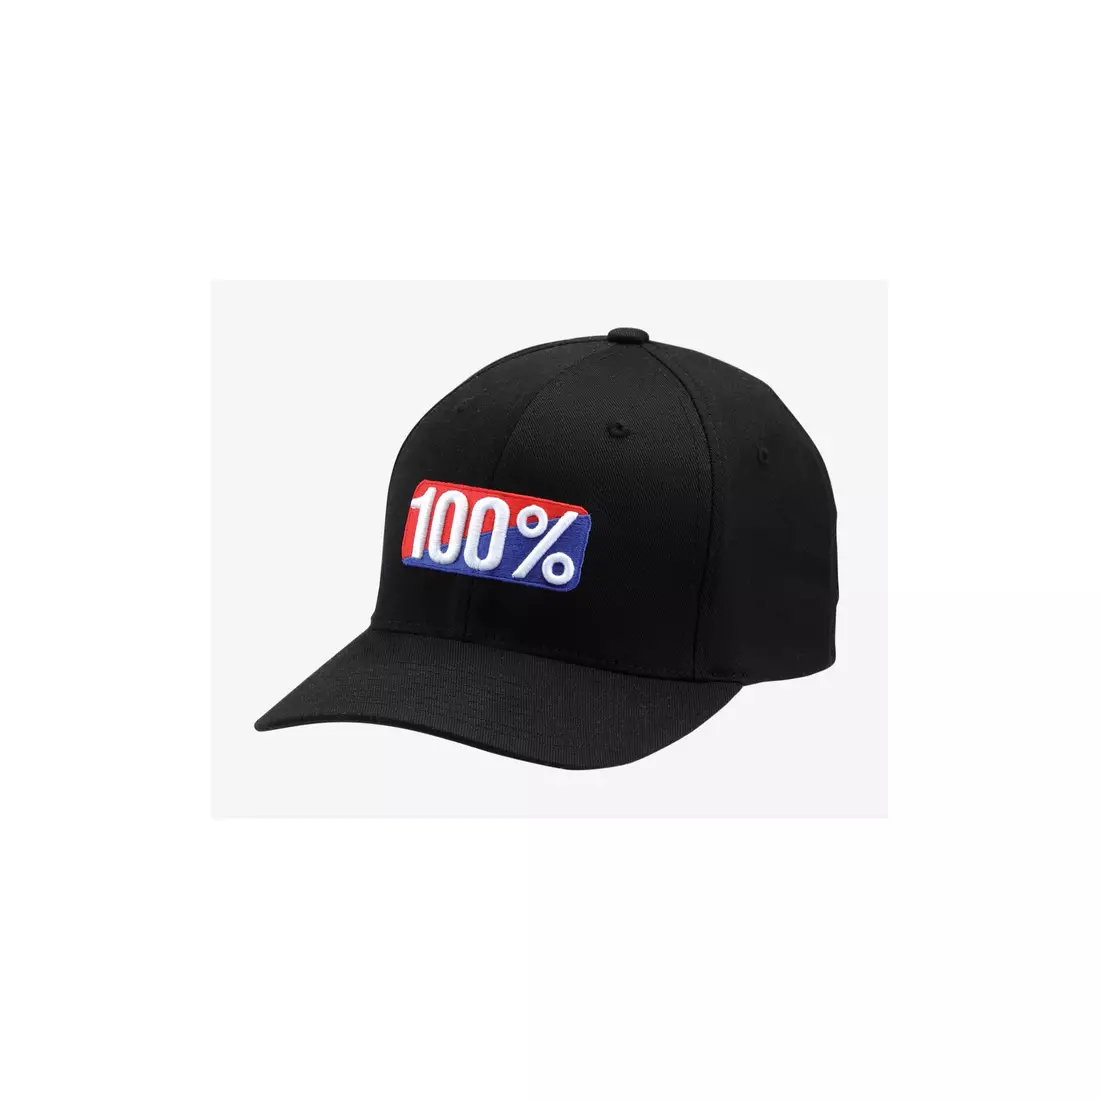 100% baseball cap CLASSIC X-Fit flexfit hat black STO-20011-001-18